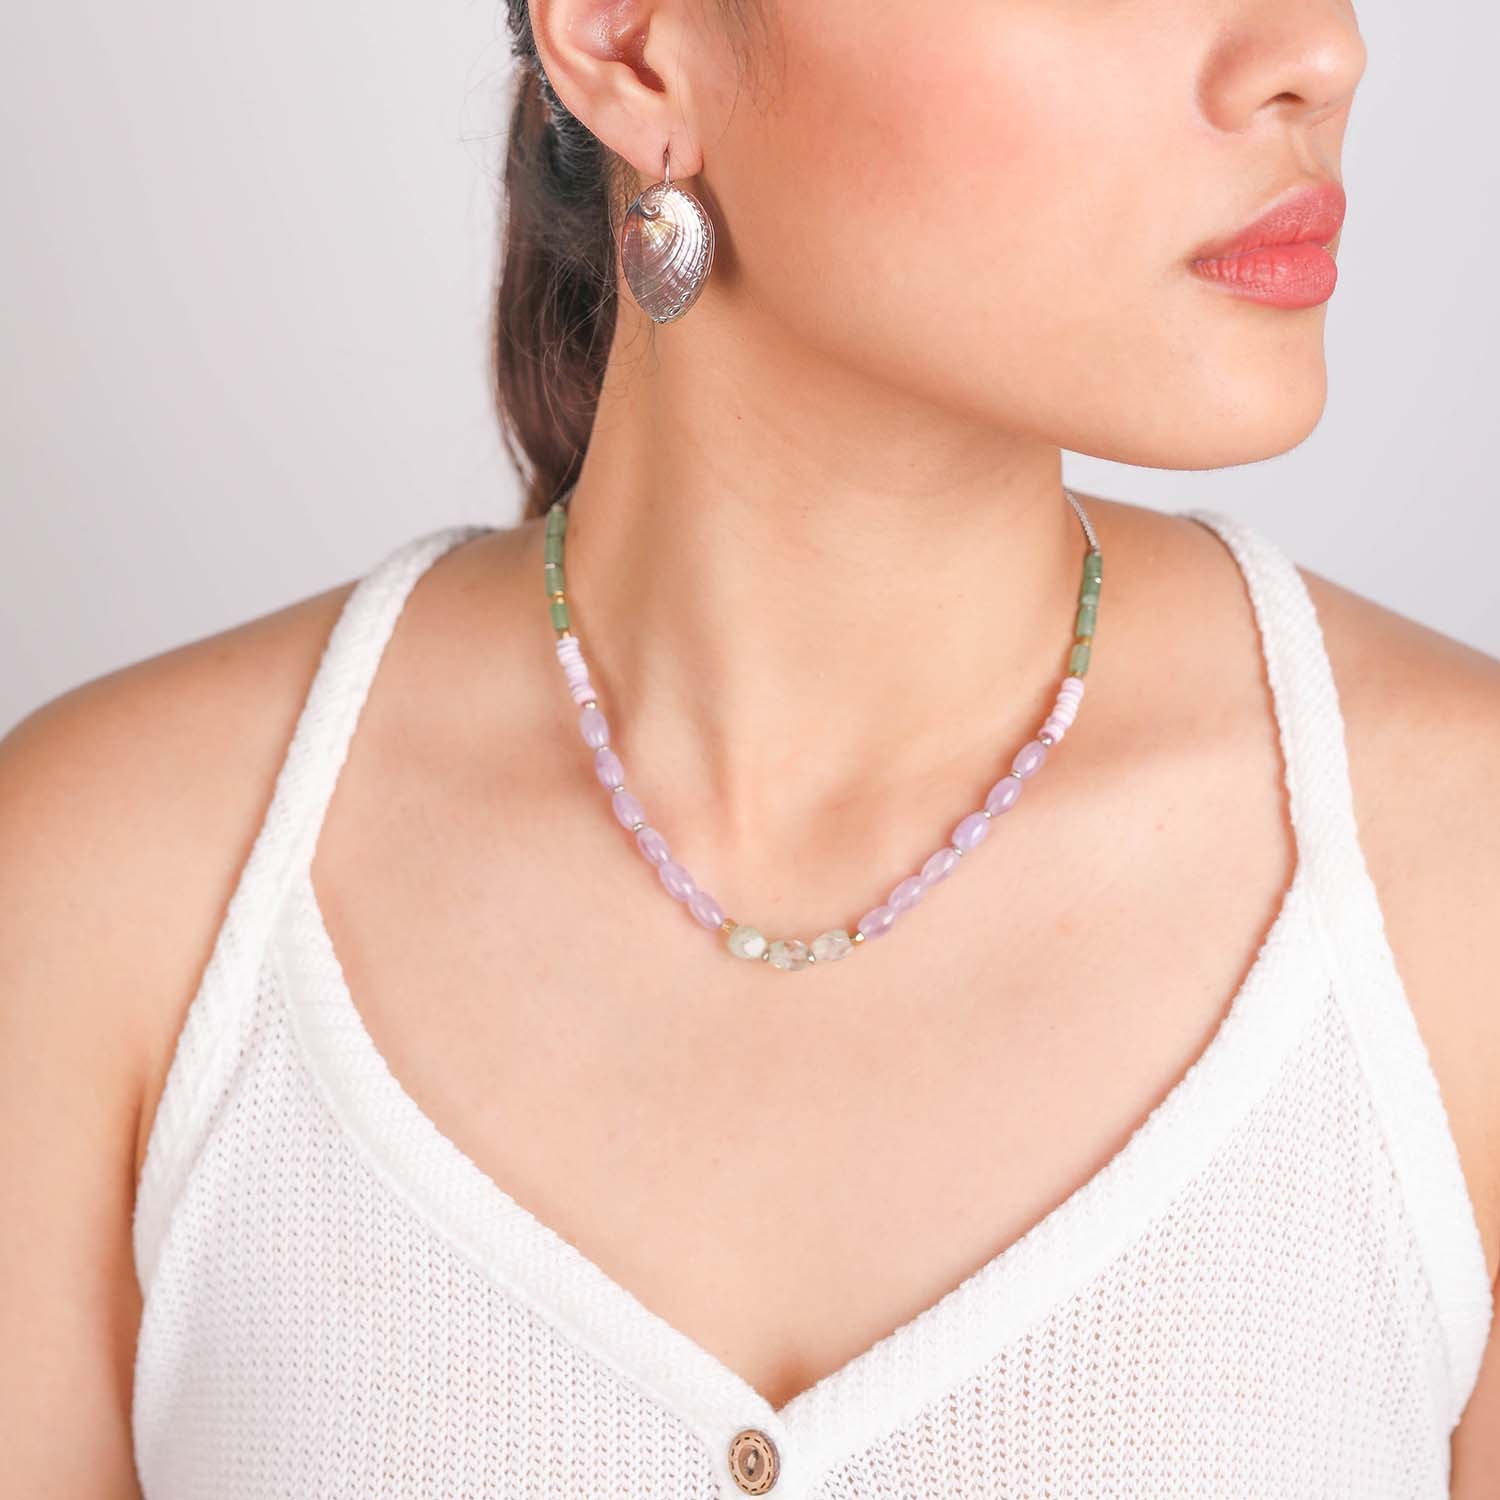 Nature Bijoux Short Necklace / Amethyst, Aventurine, Quartz / Light Purple, Green / Fashion Jewelry / Water Lily - 0